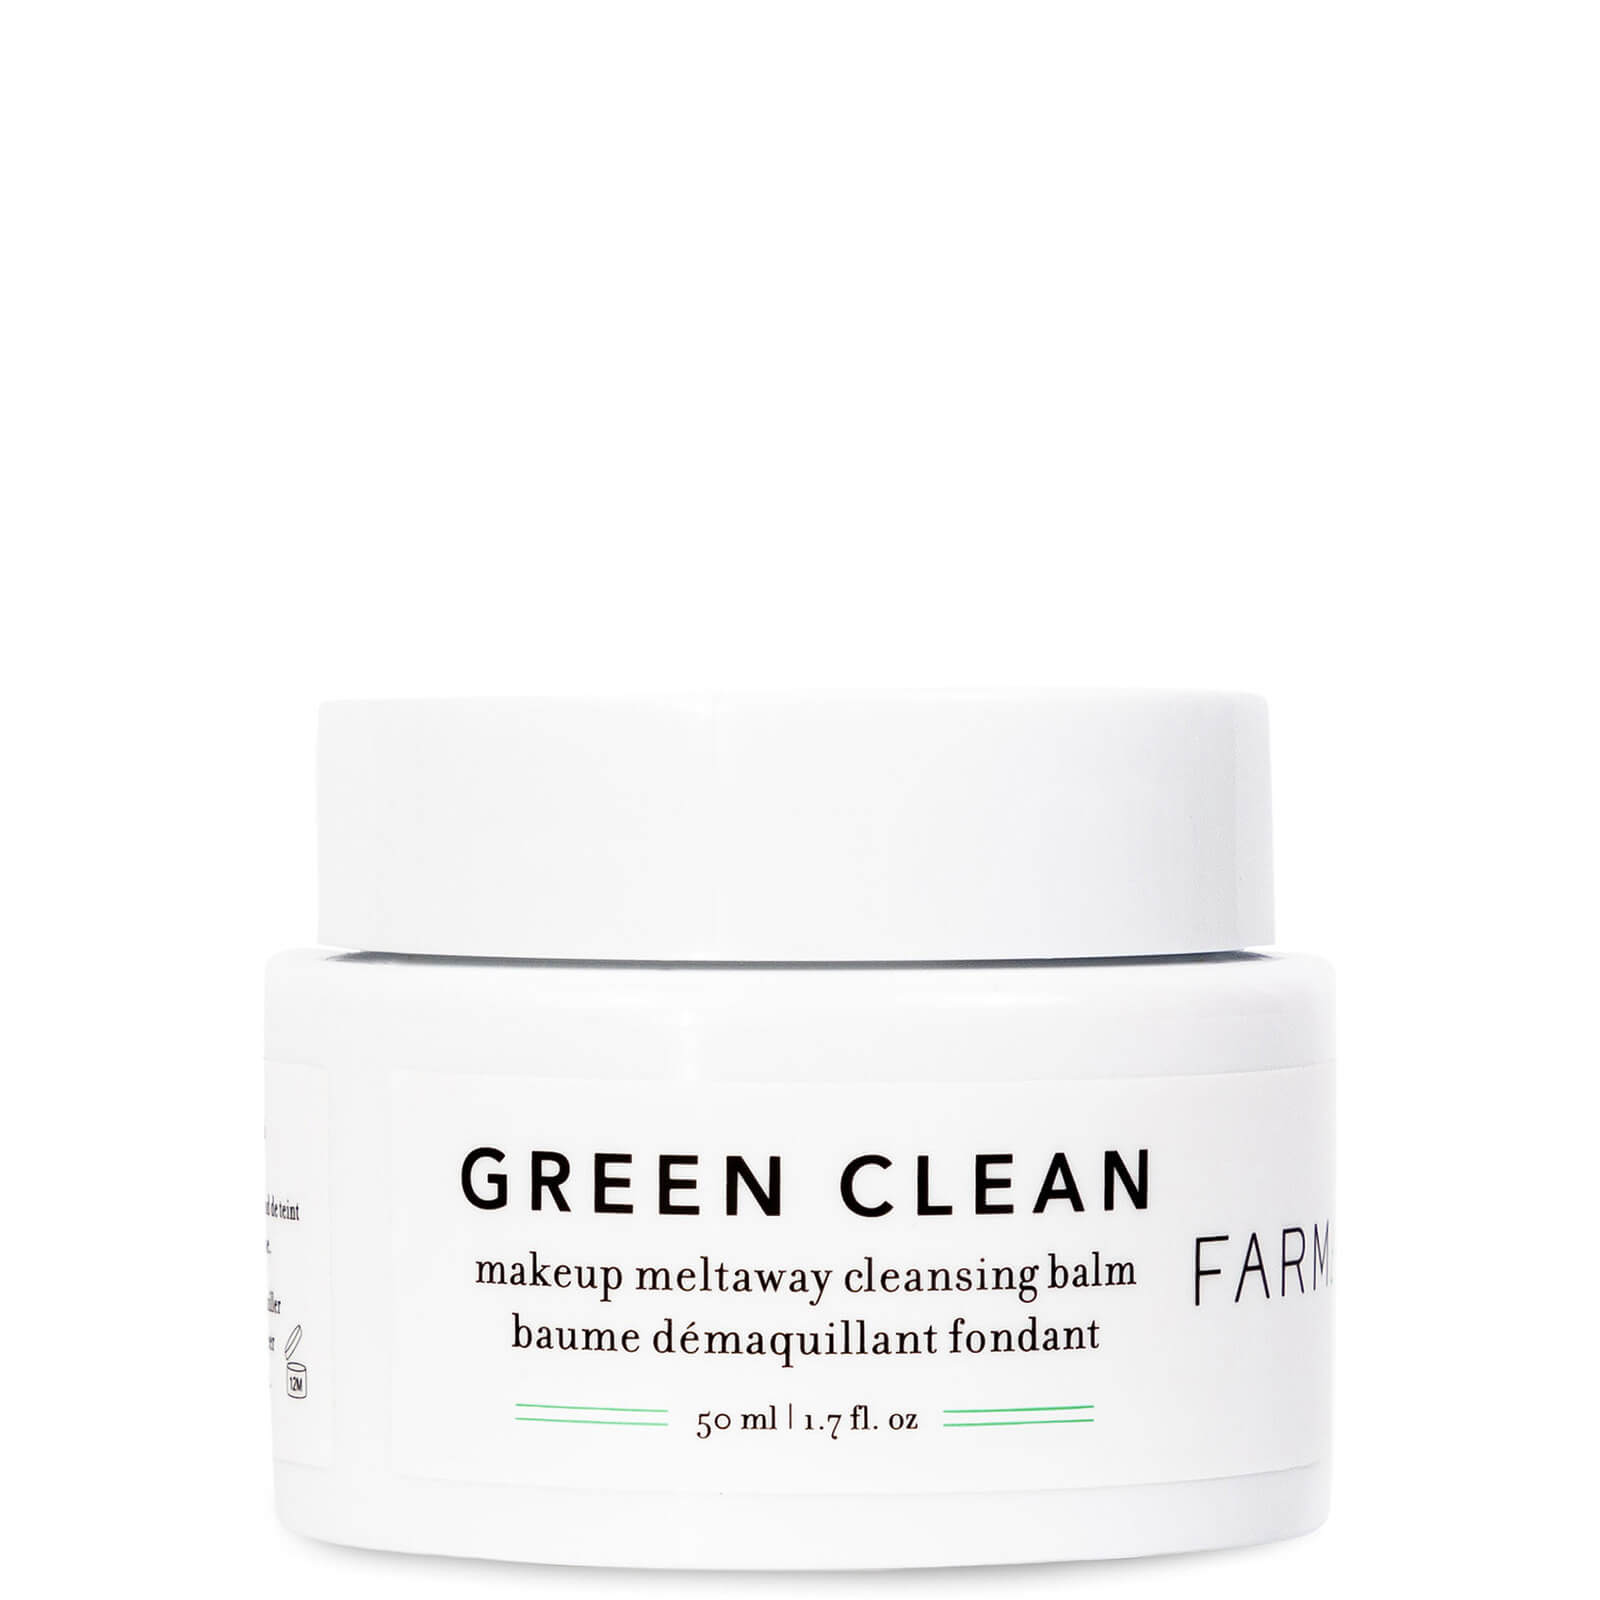 FARMACY Green Clean Makeup Meltaway Cleansing Balm 50ml lookfantastic.com imagine